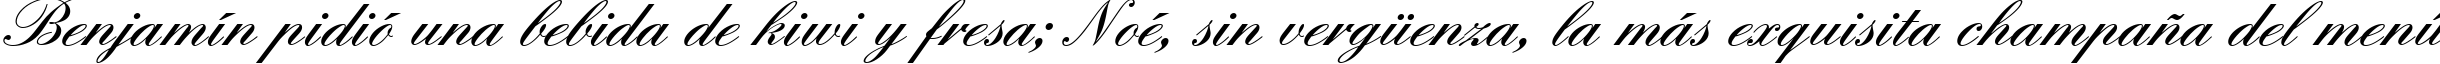 Пример написания шрифтом EnglischeSchTDemBol текста на испанском